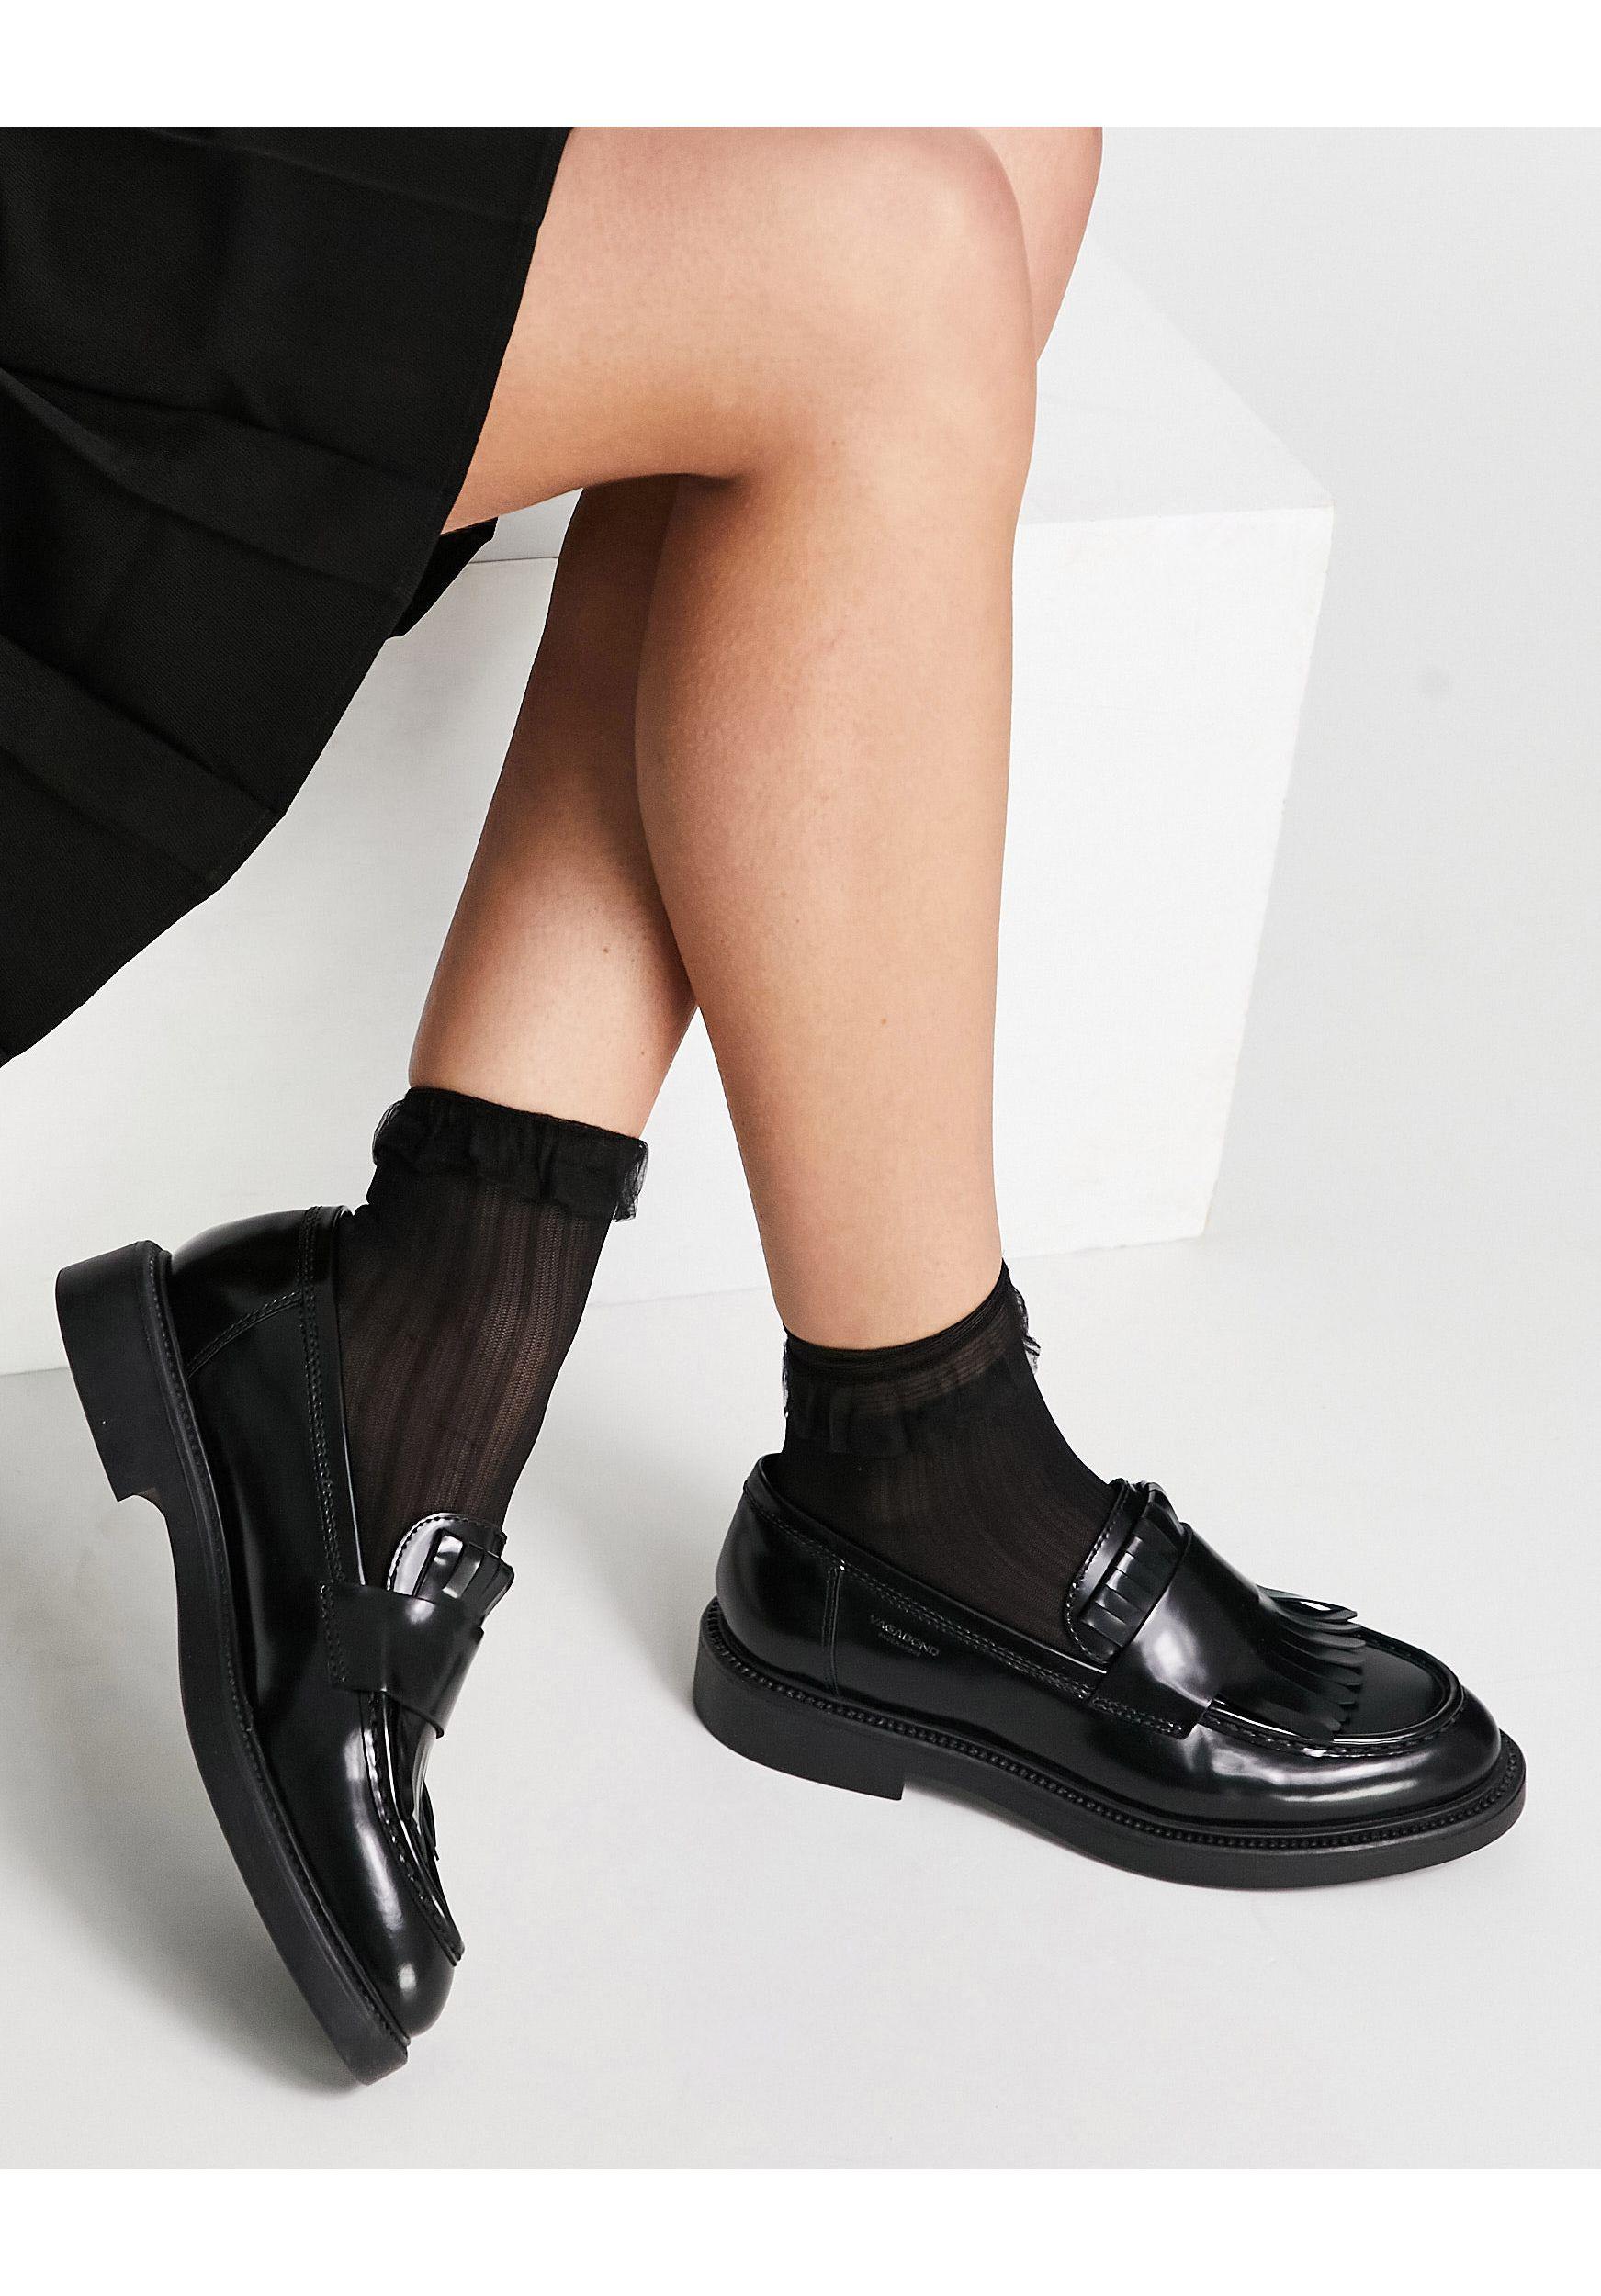 Vagabond Shoemakers Alex Fringed Loafer in Black | Lyst Australia